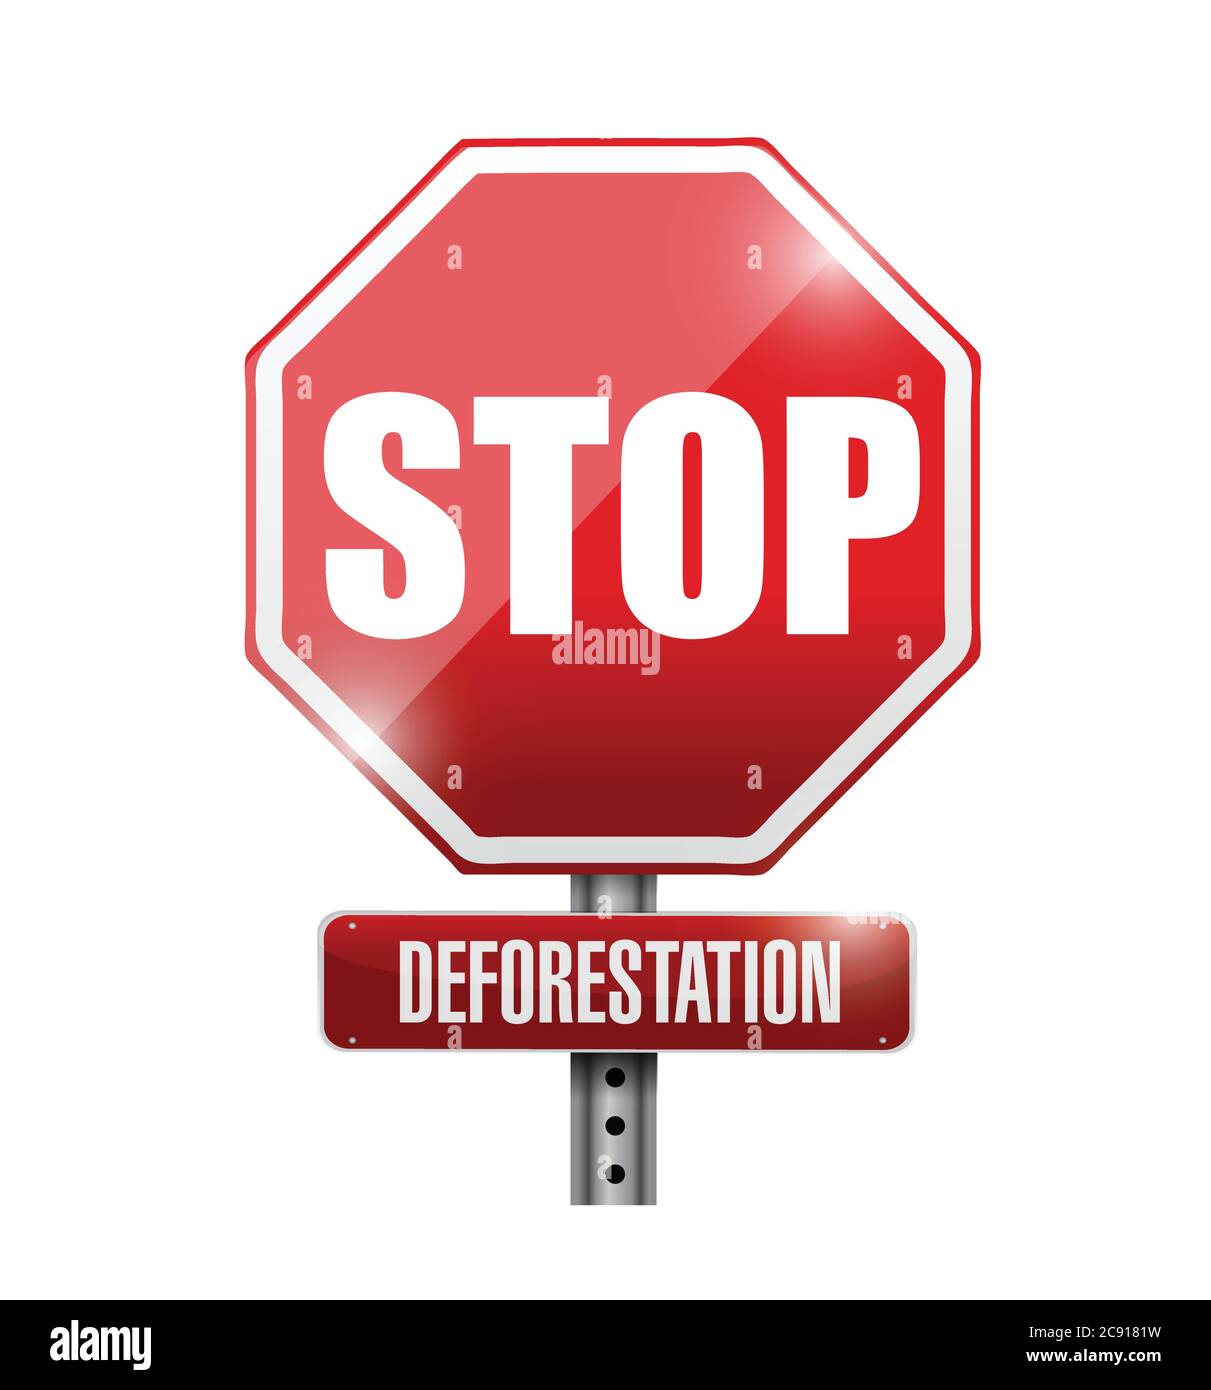 Stop deforestation street sign illustration design over a white background Stock Vector